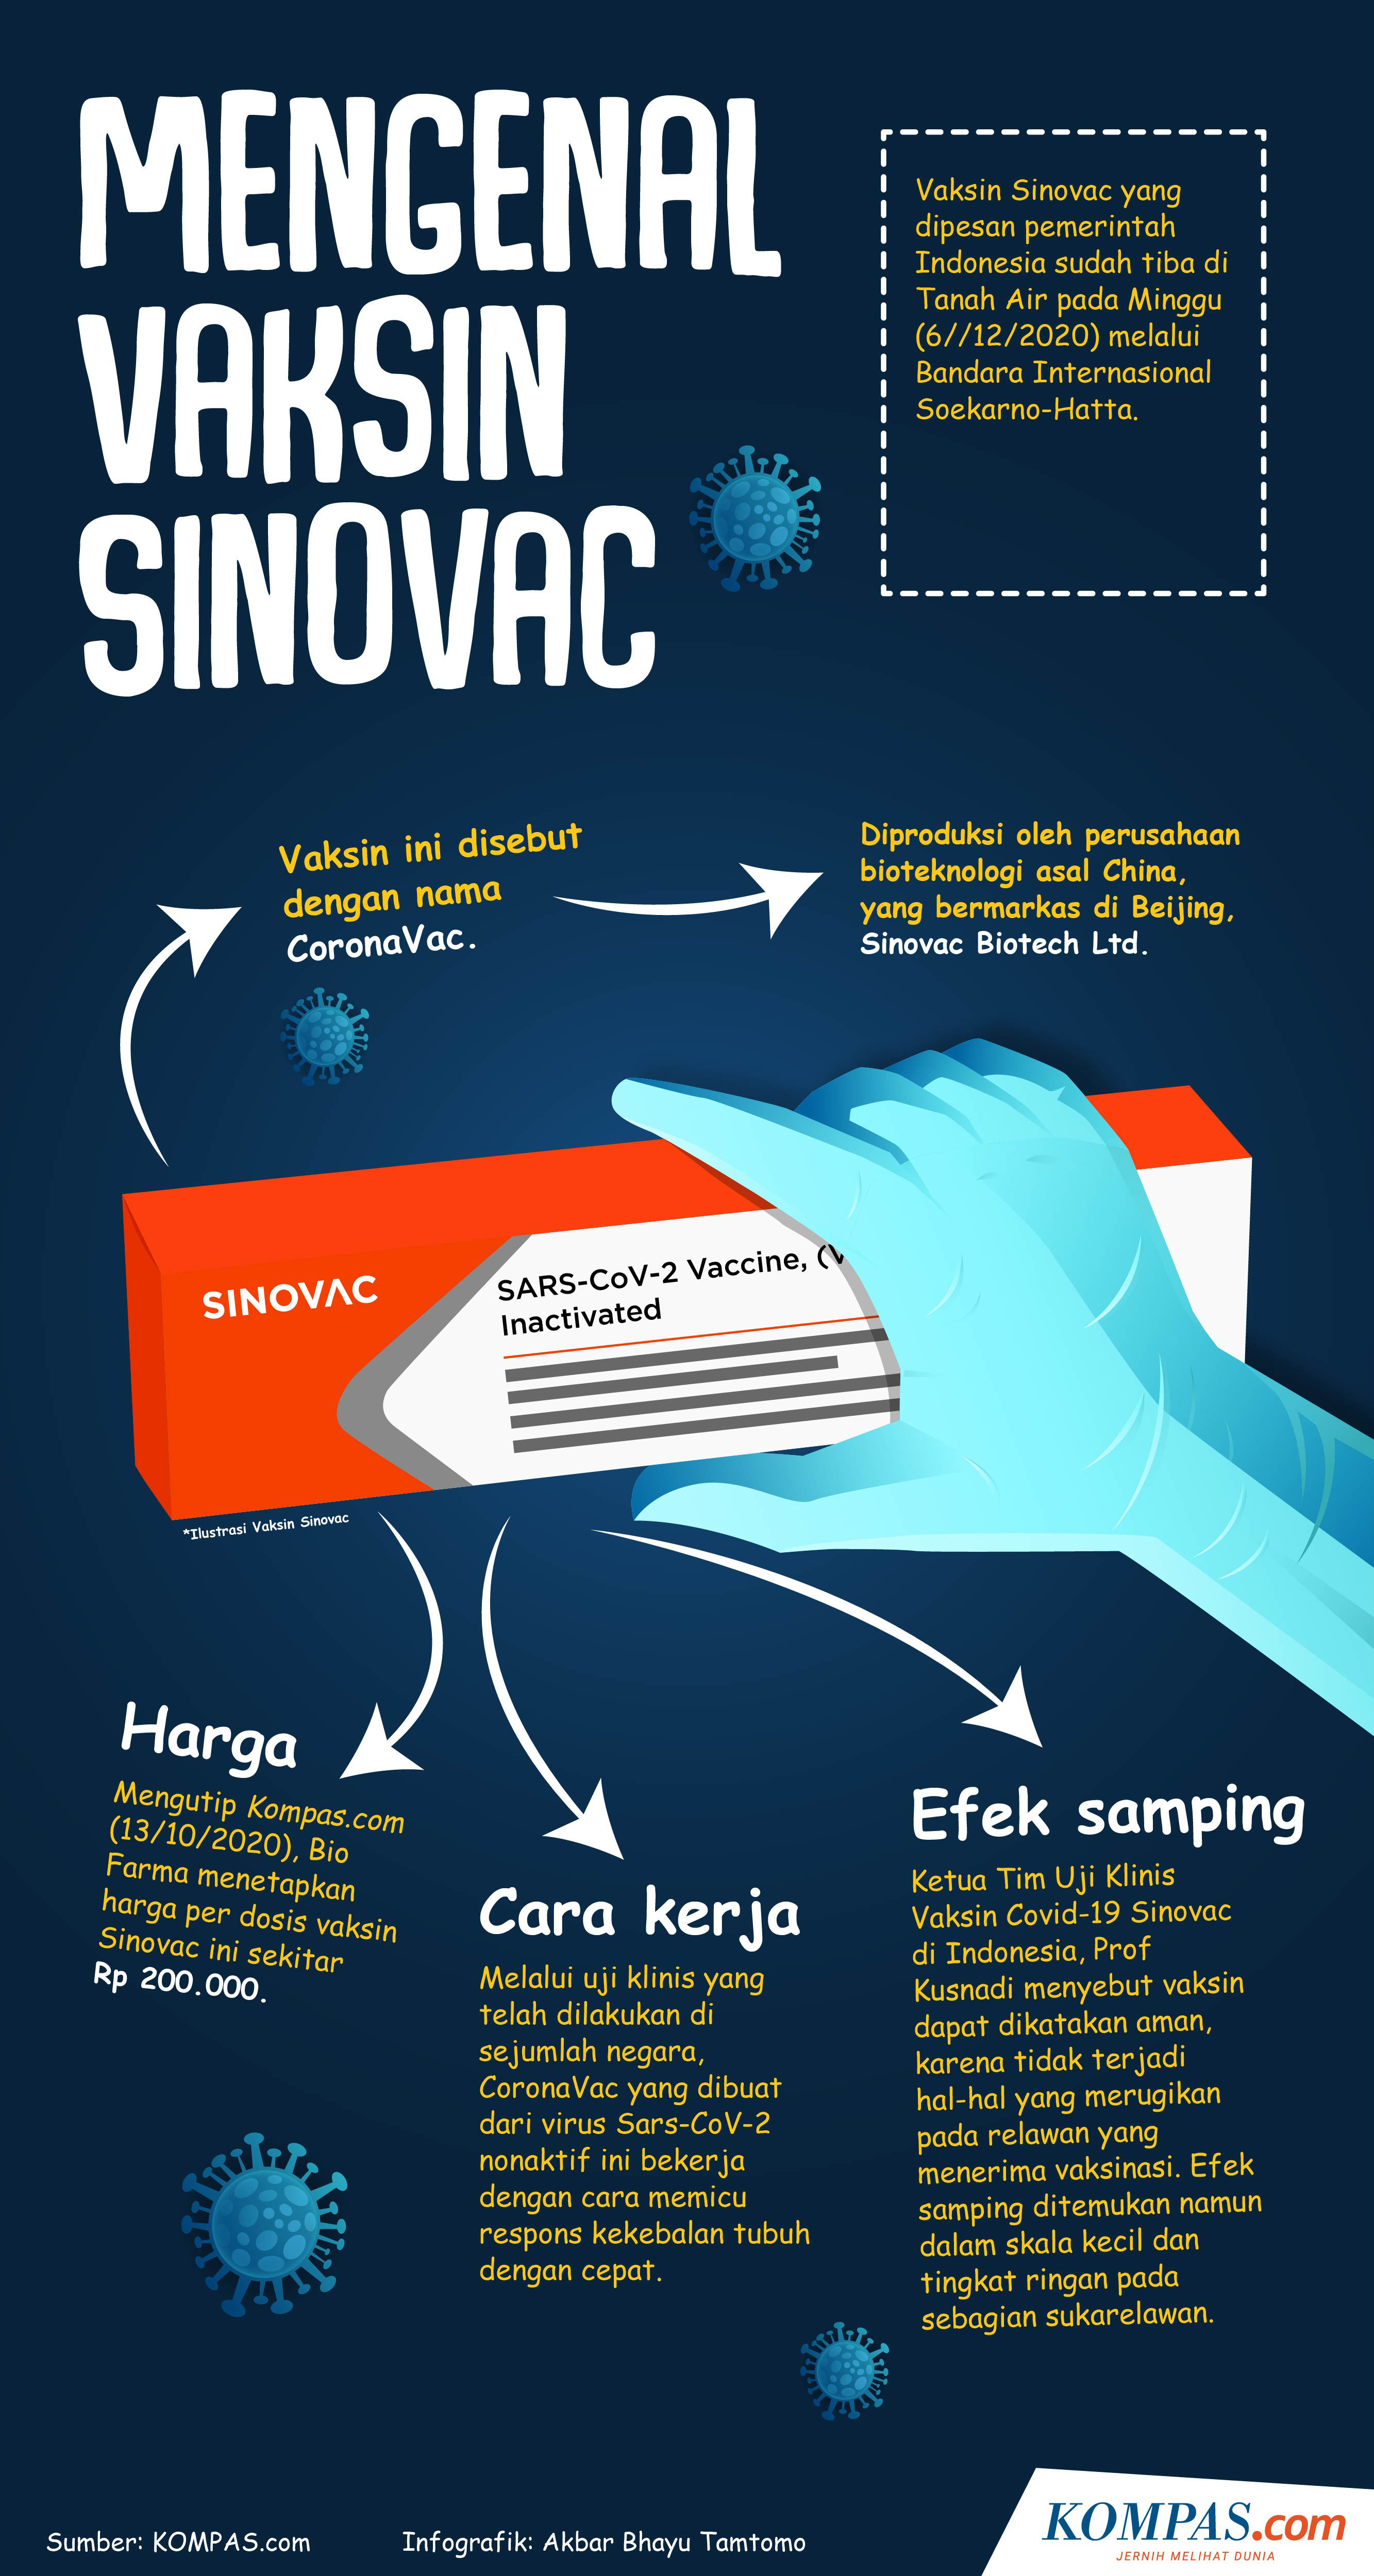 Sinovac tidak diiktiraf